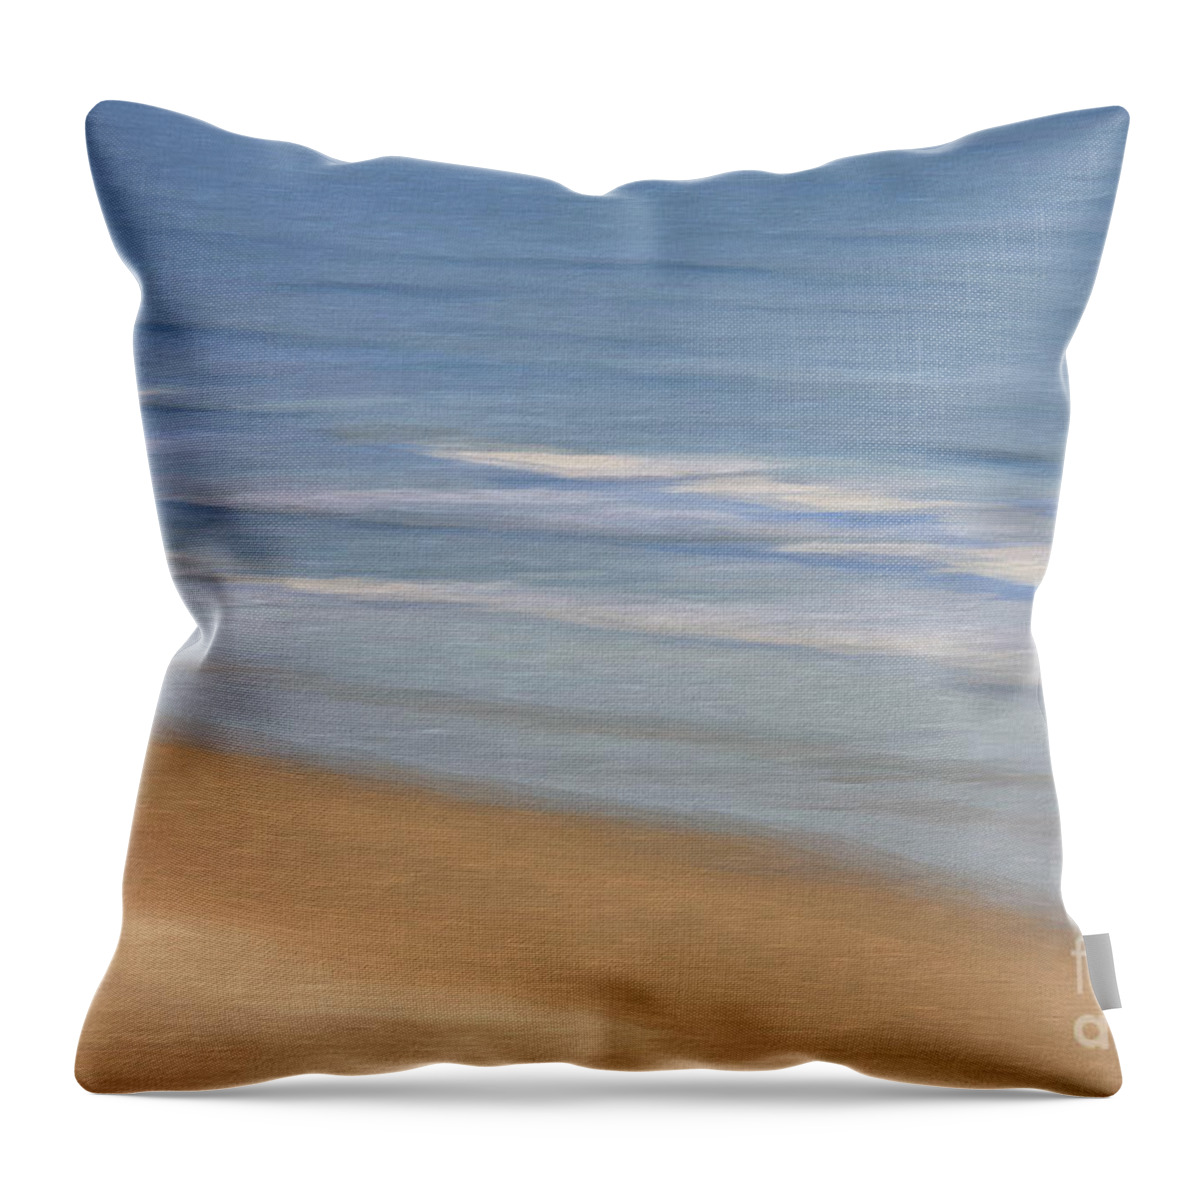 Ocean Throw Pillow featuring the digital art Ocean Abstract by Jayne Carney